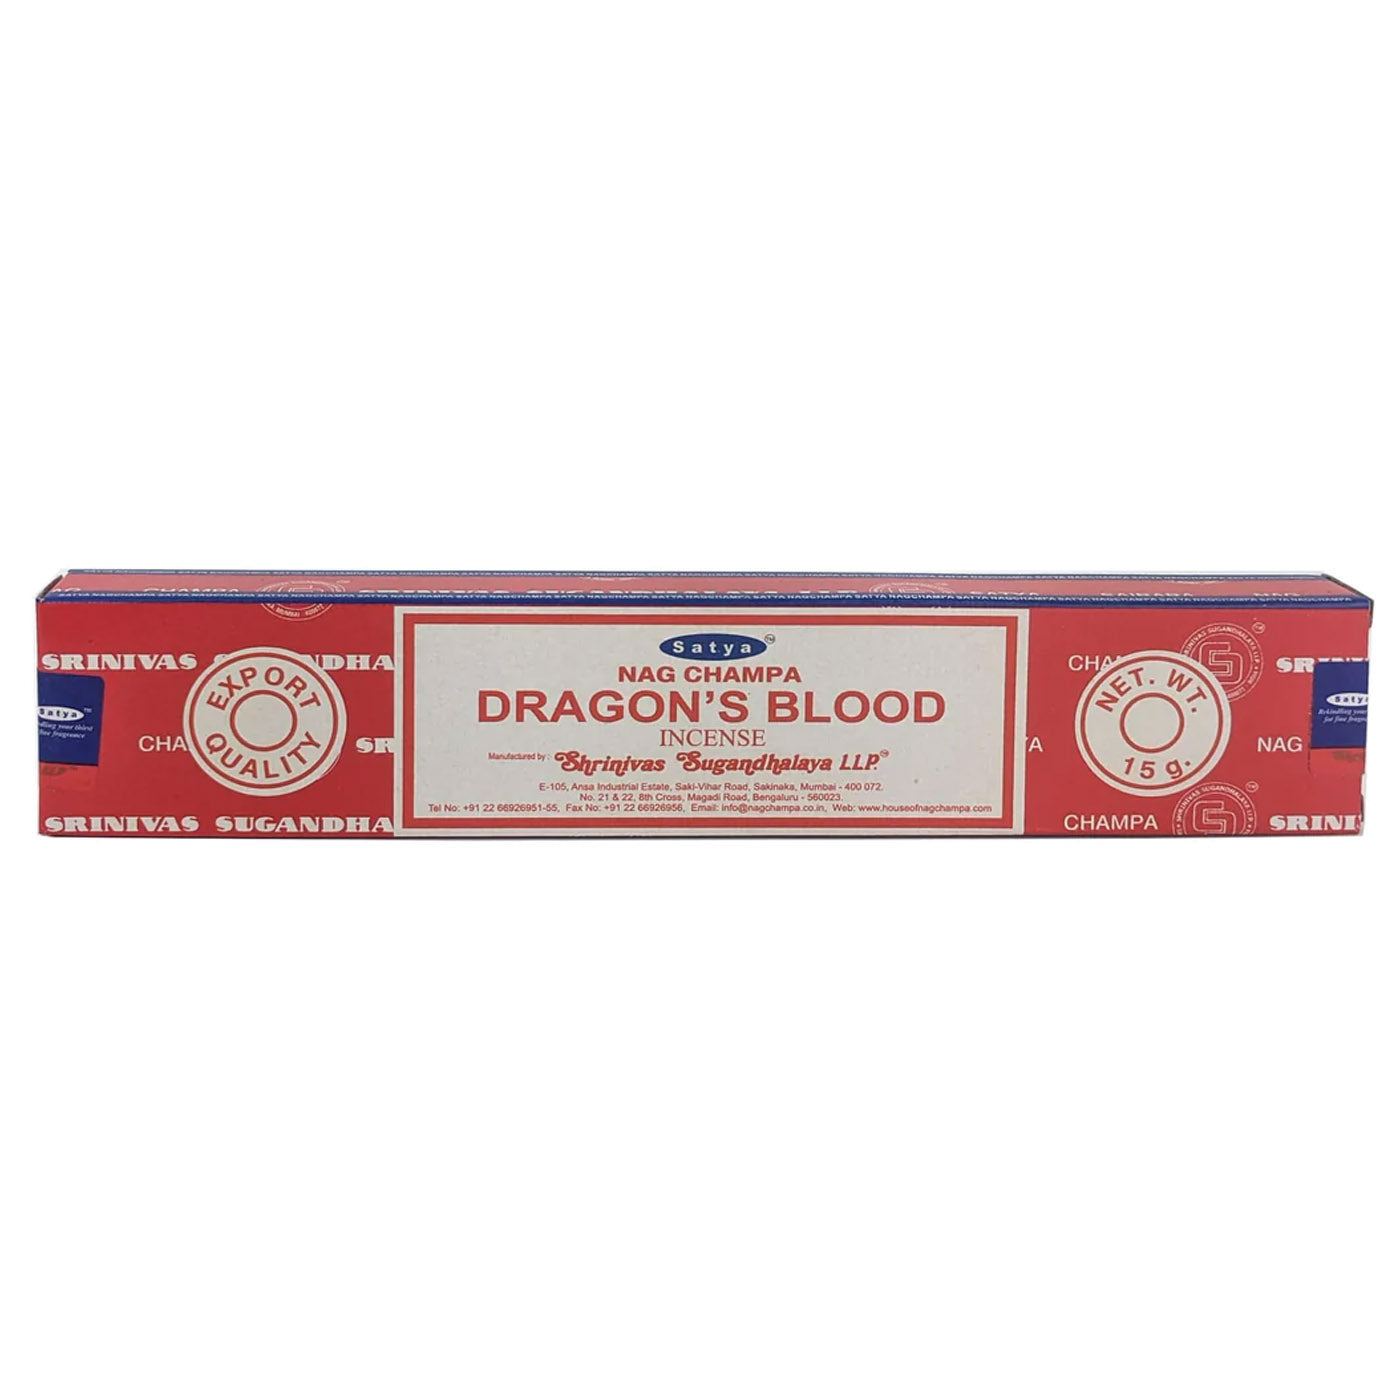 Satya Dragon's Blood Incense Sticks